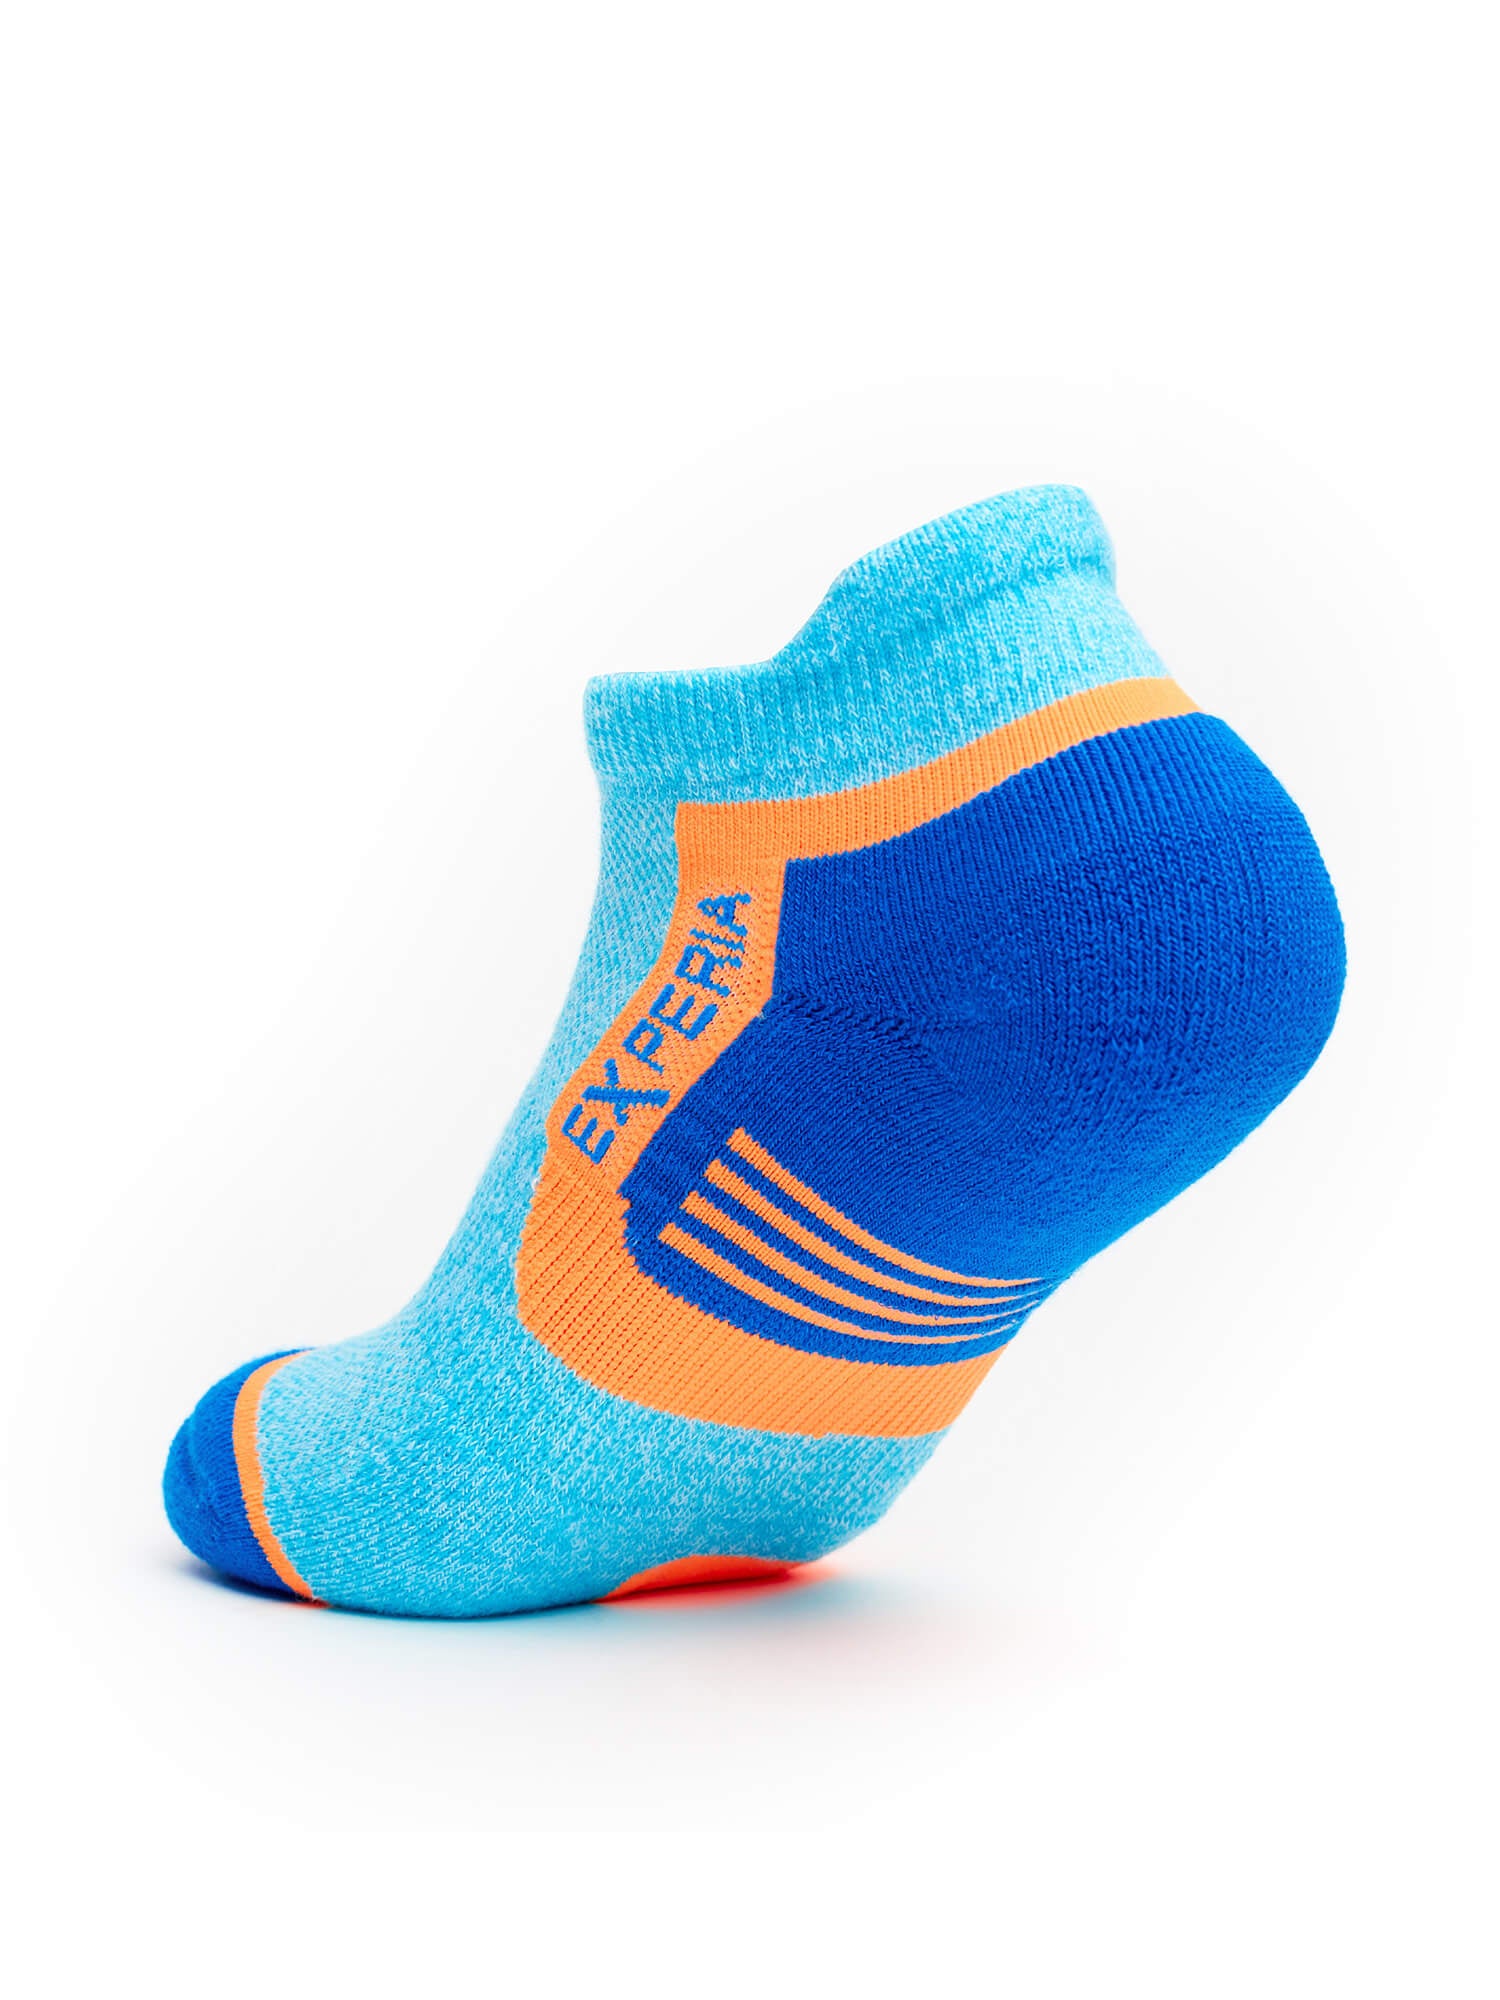 Heel of Thorlos Experia Repreve Low Cut Socks in Blue